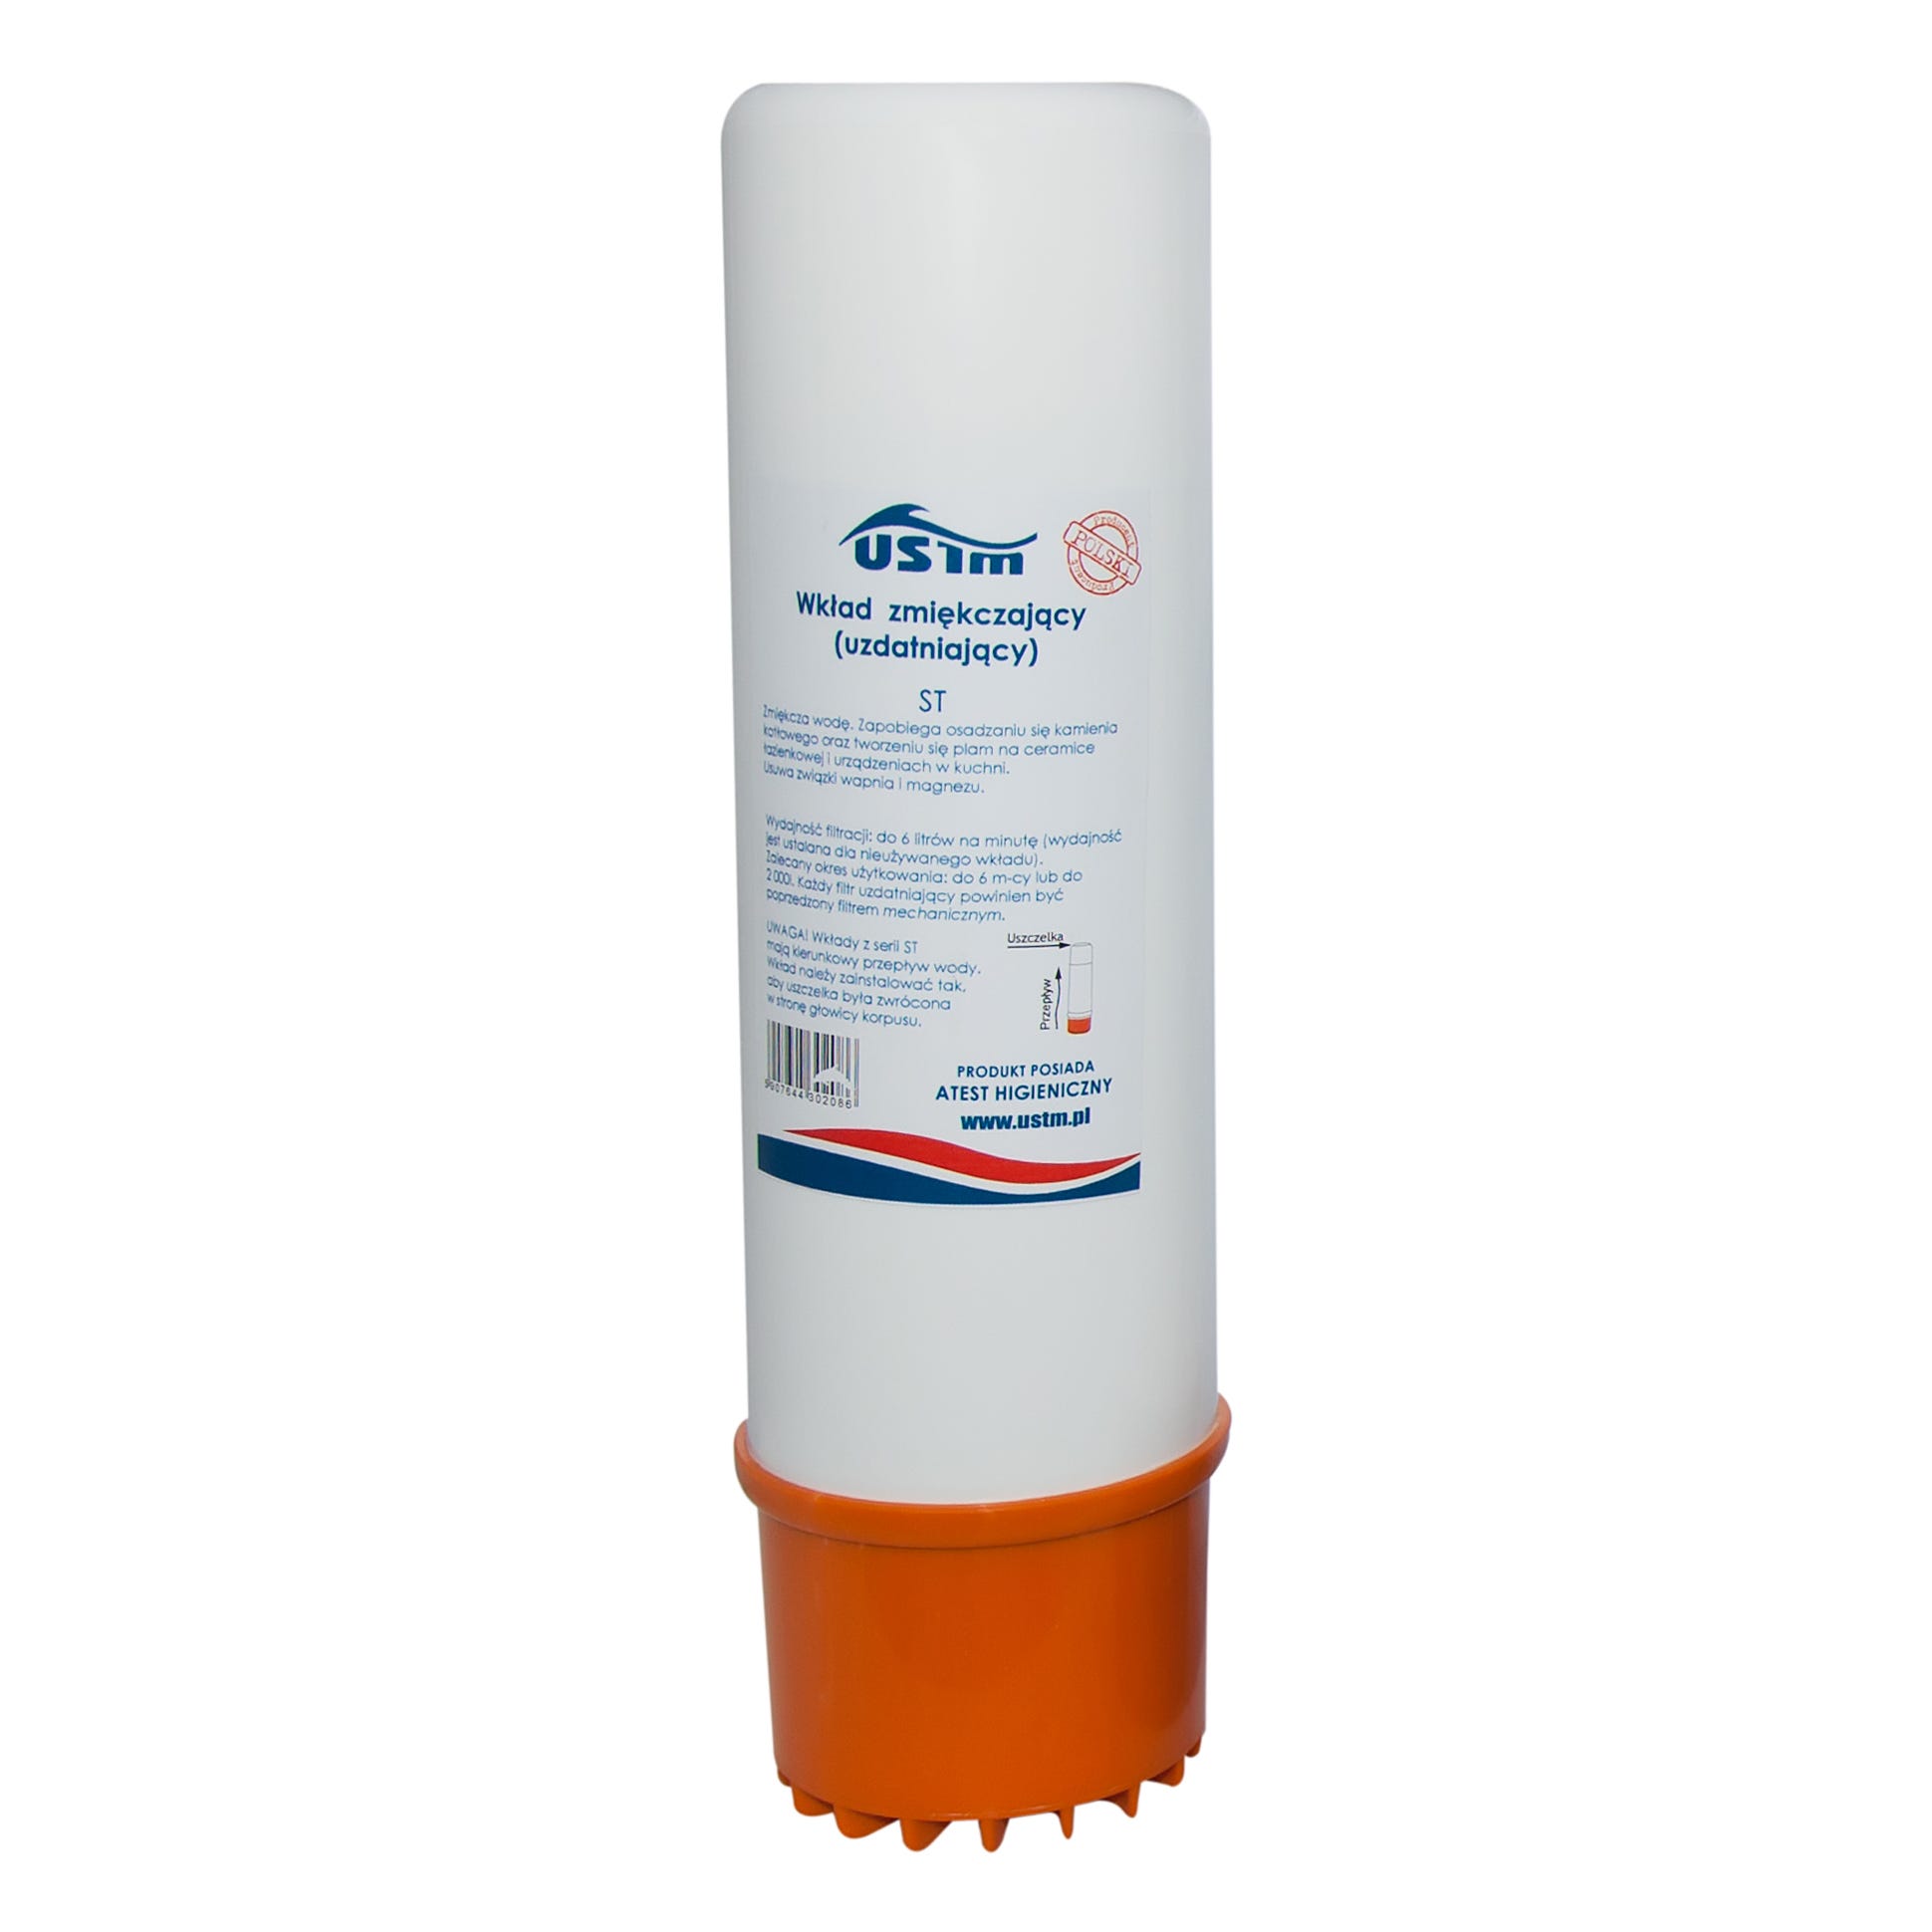 Eurofilter filtro de agua (cartucho filtrante) antical 4 uds. para